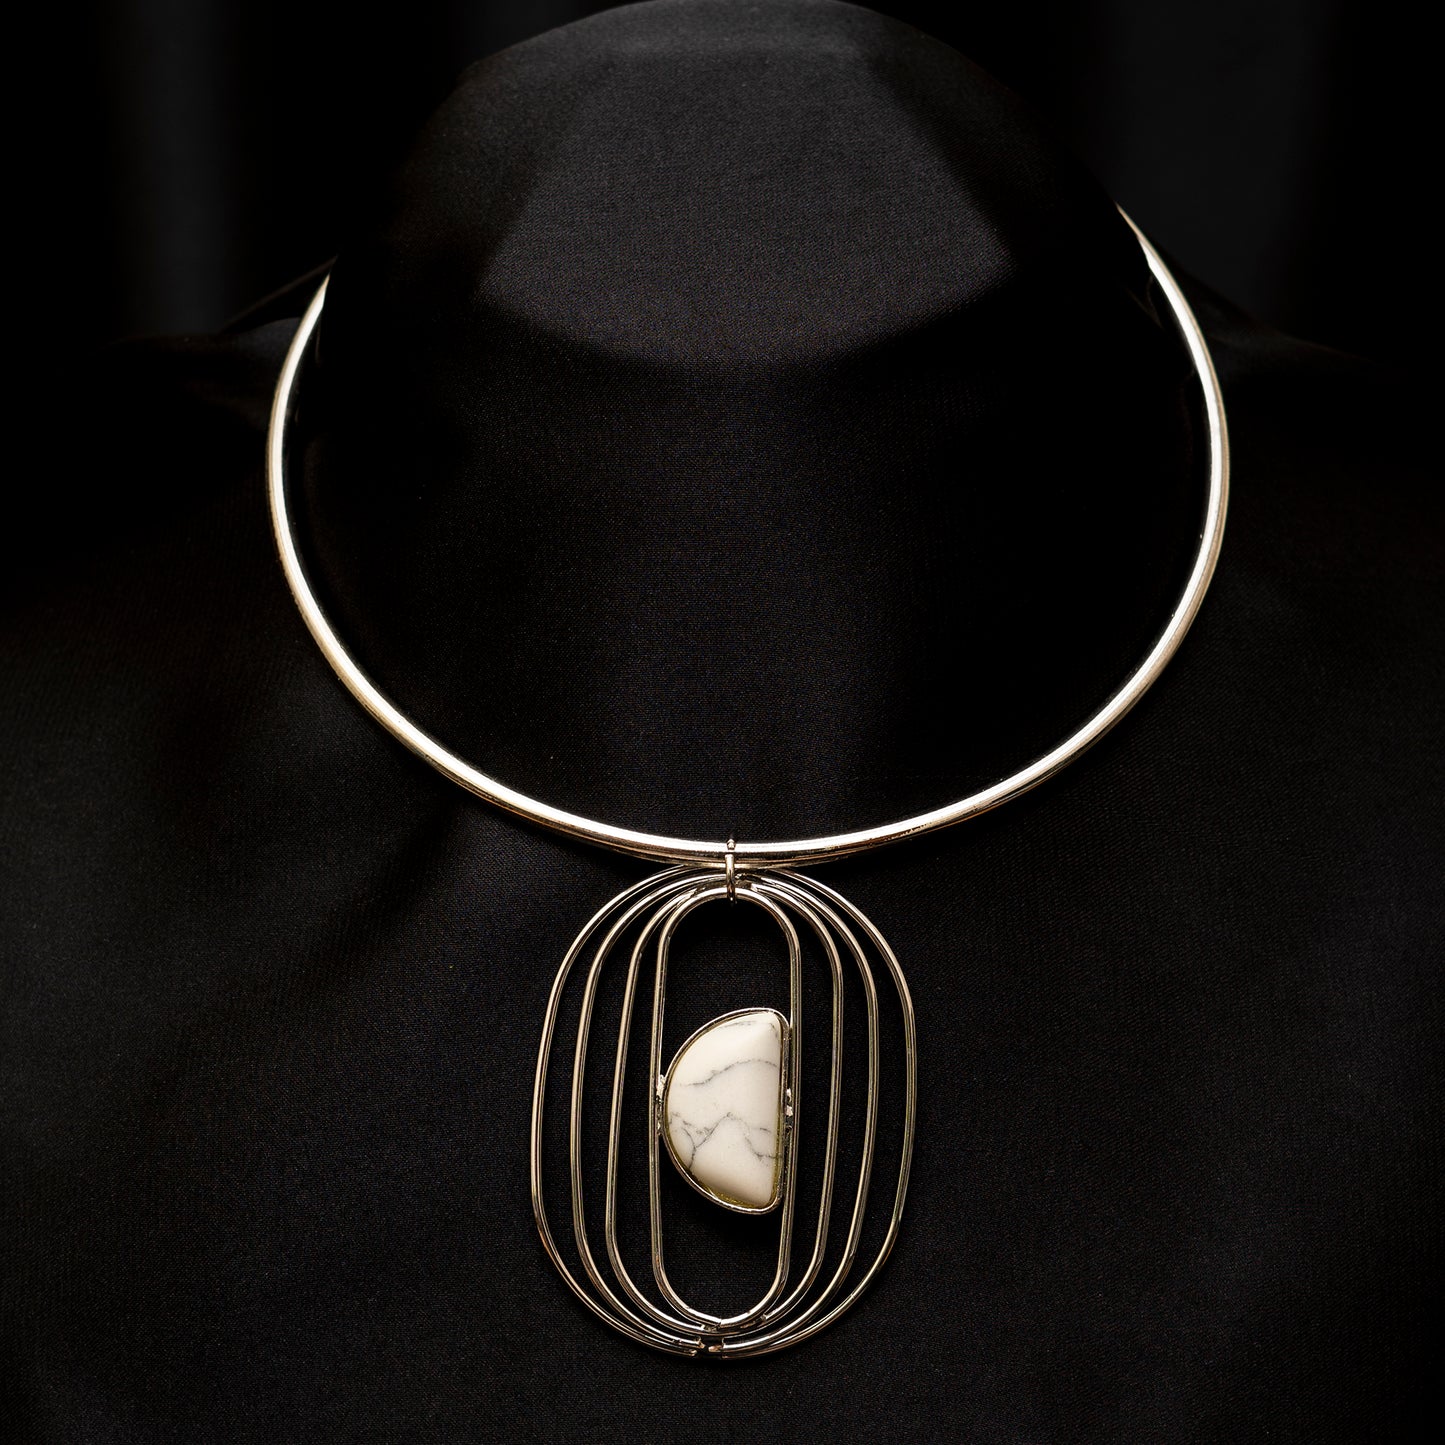 Stone Necklace